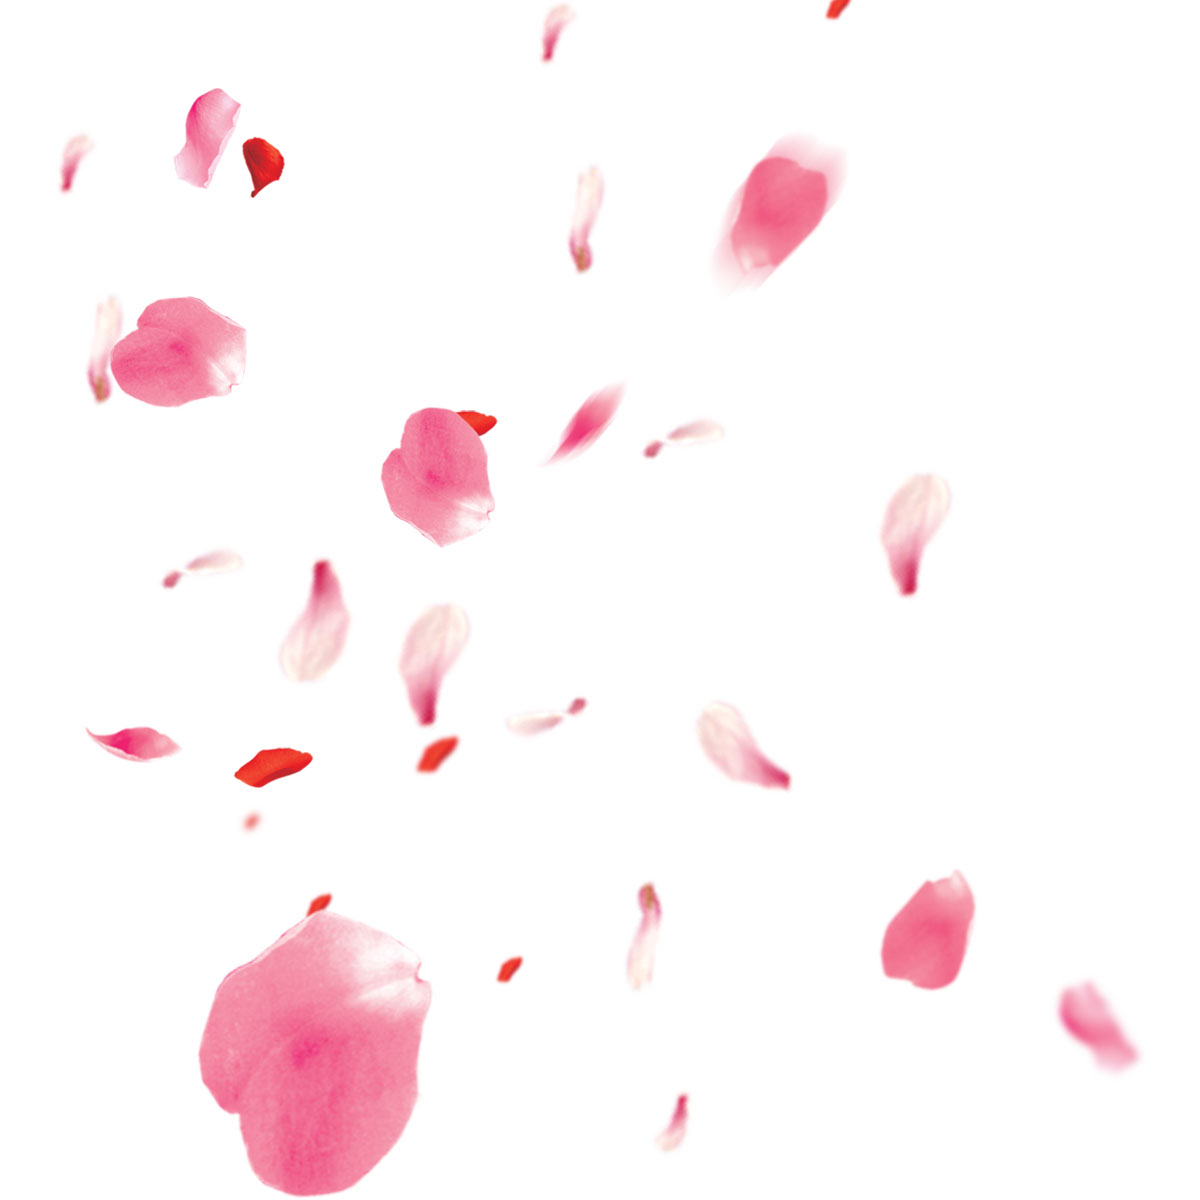 Flower petals rendition image